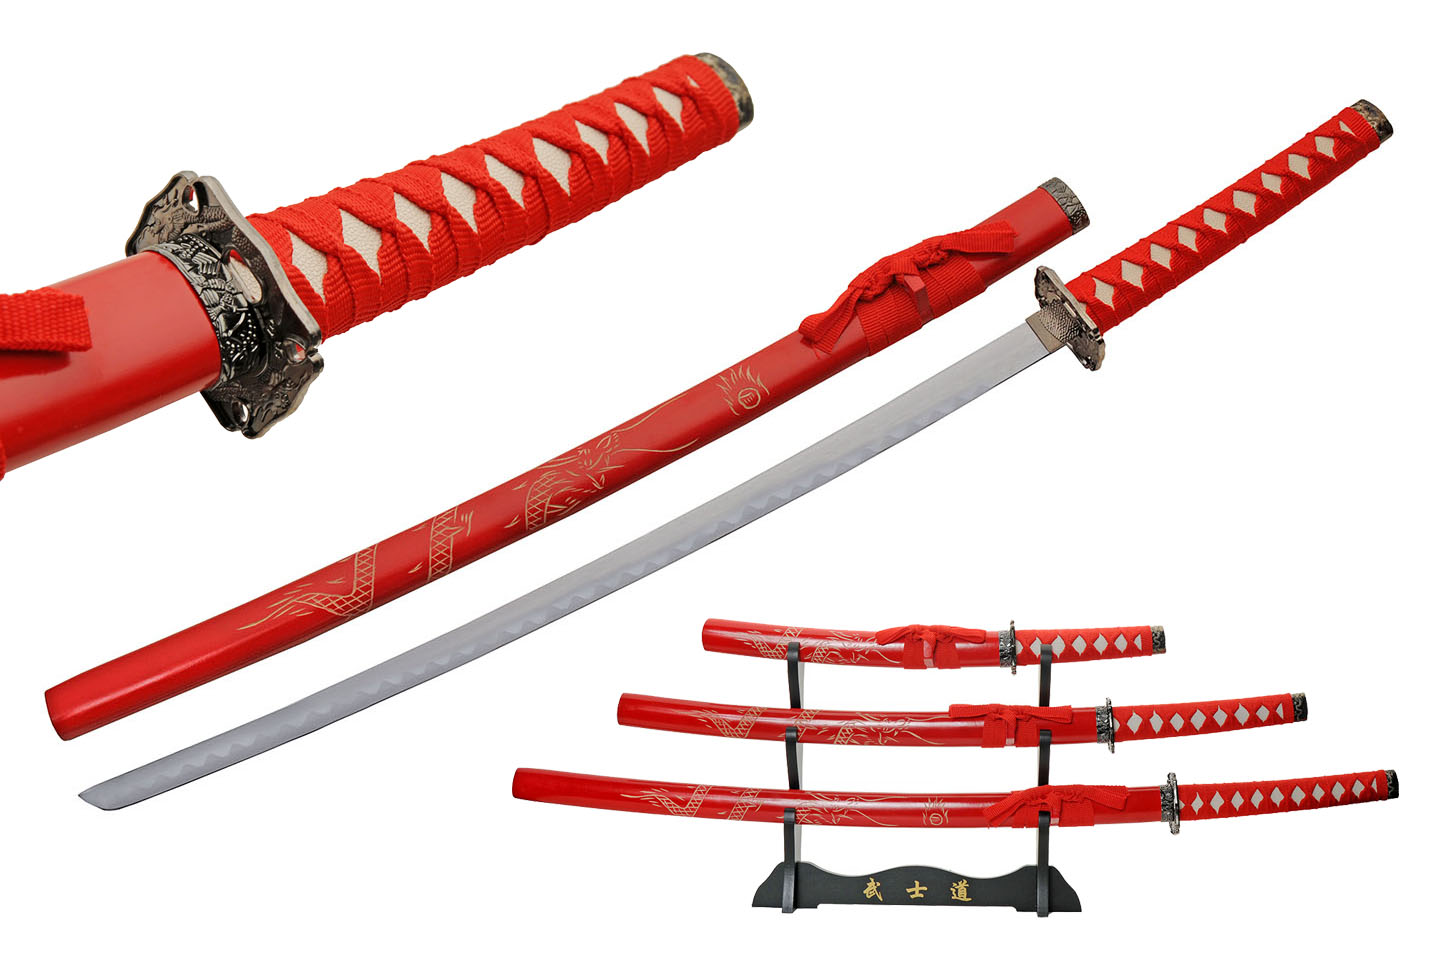 Three Piece Ninja Sword Throwing Knife Set